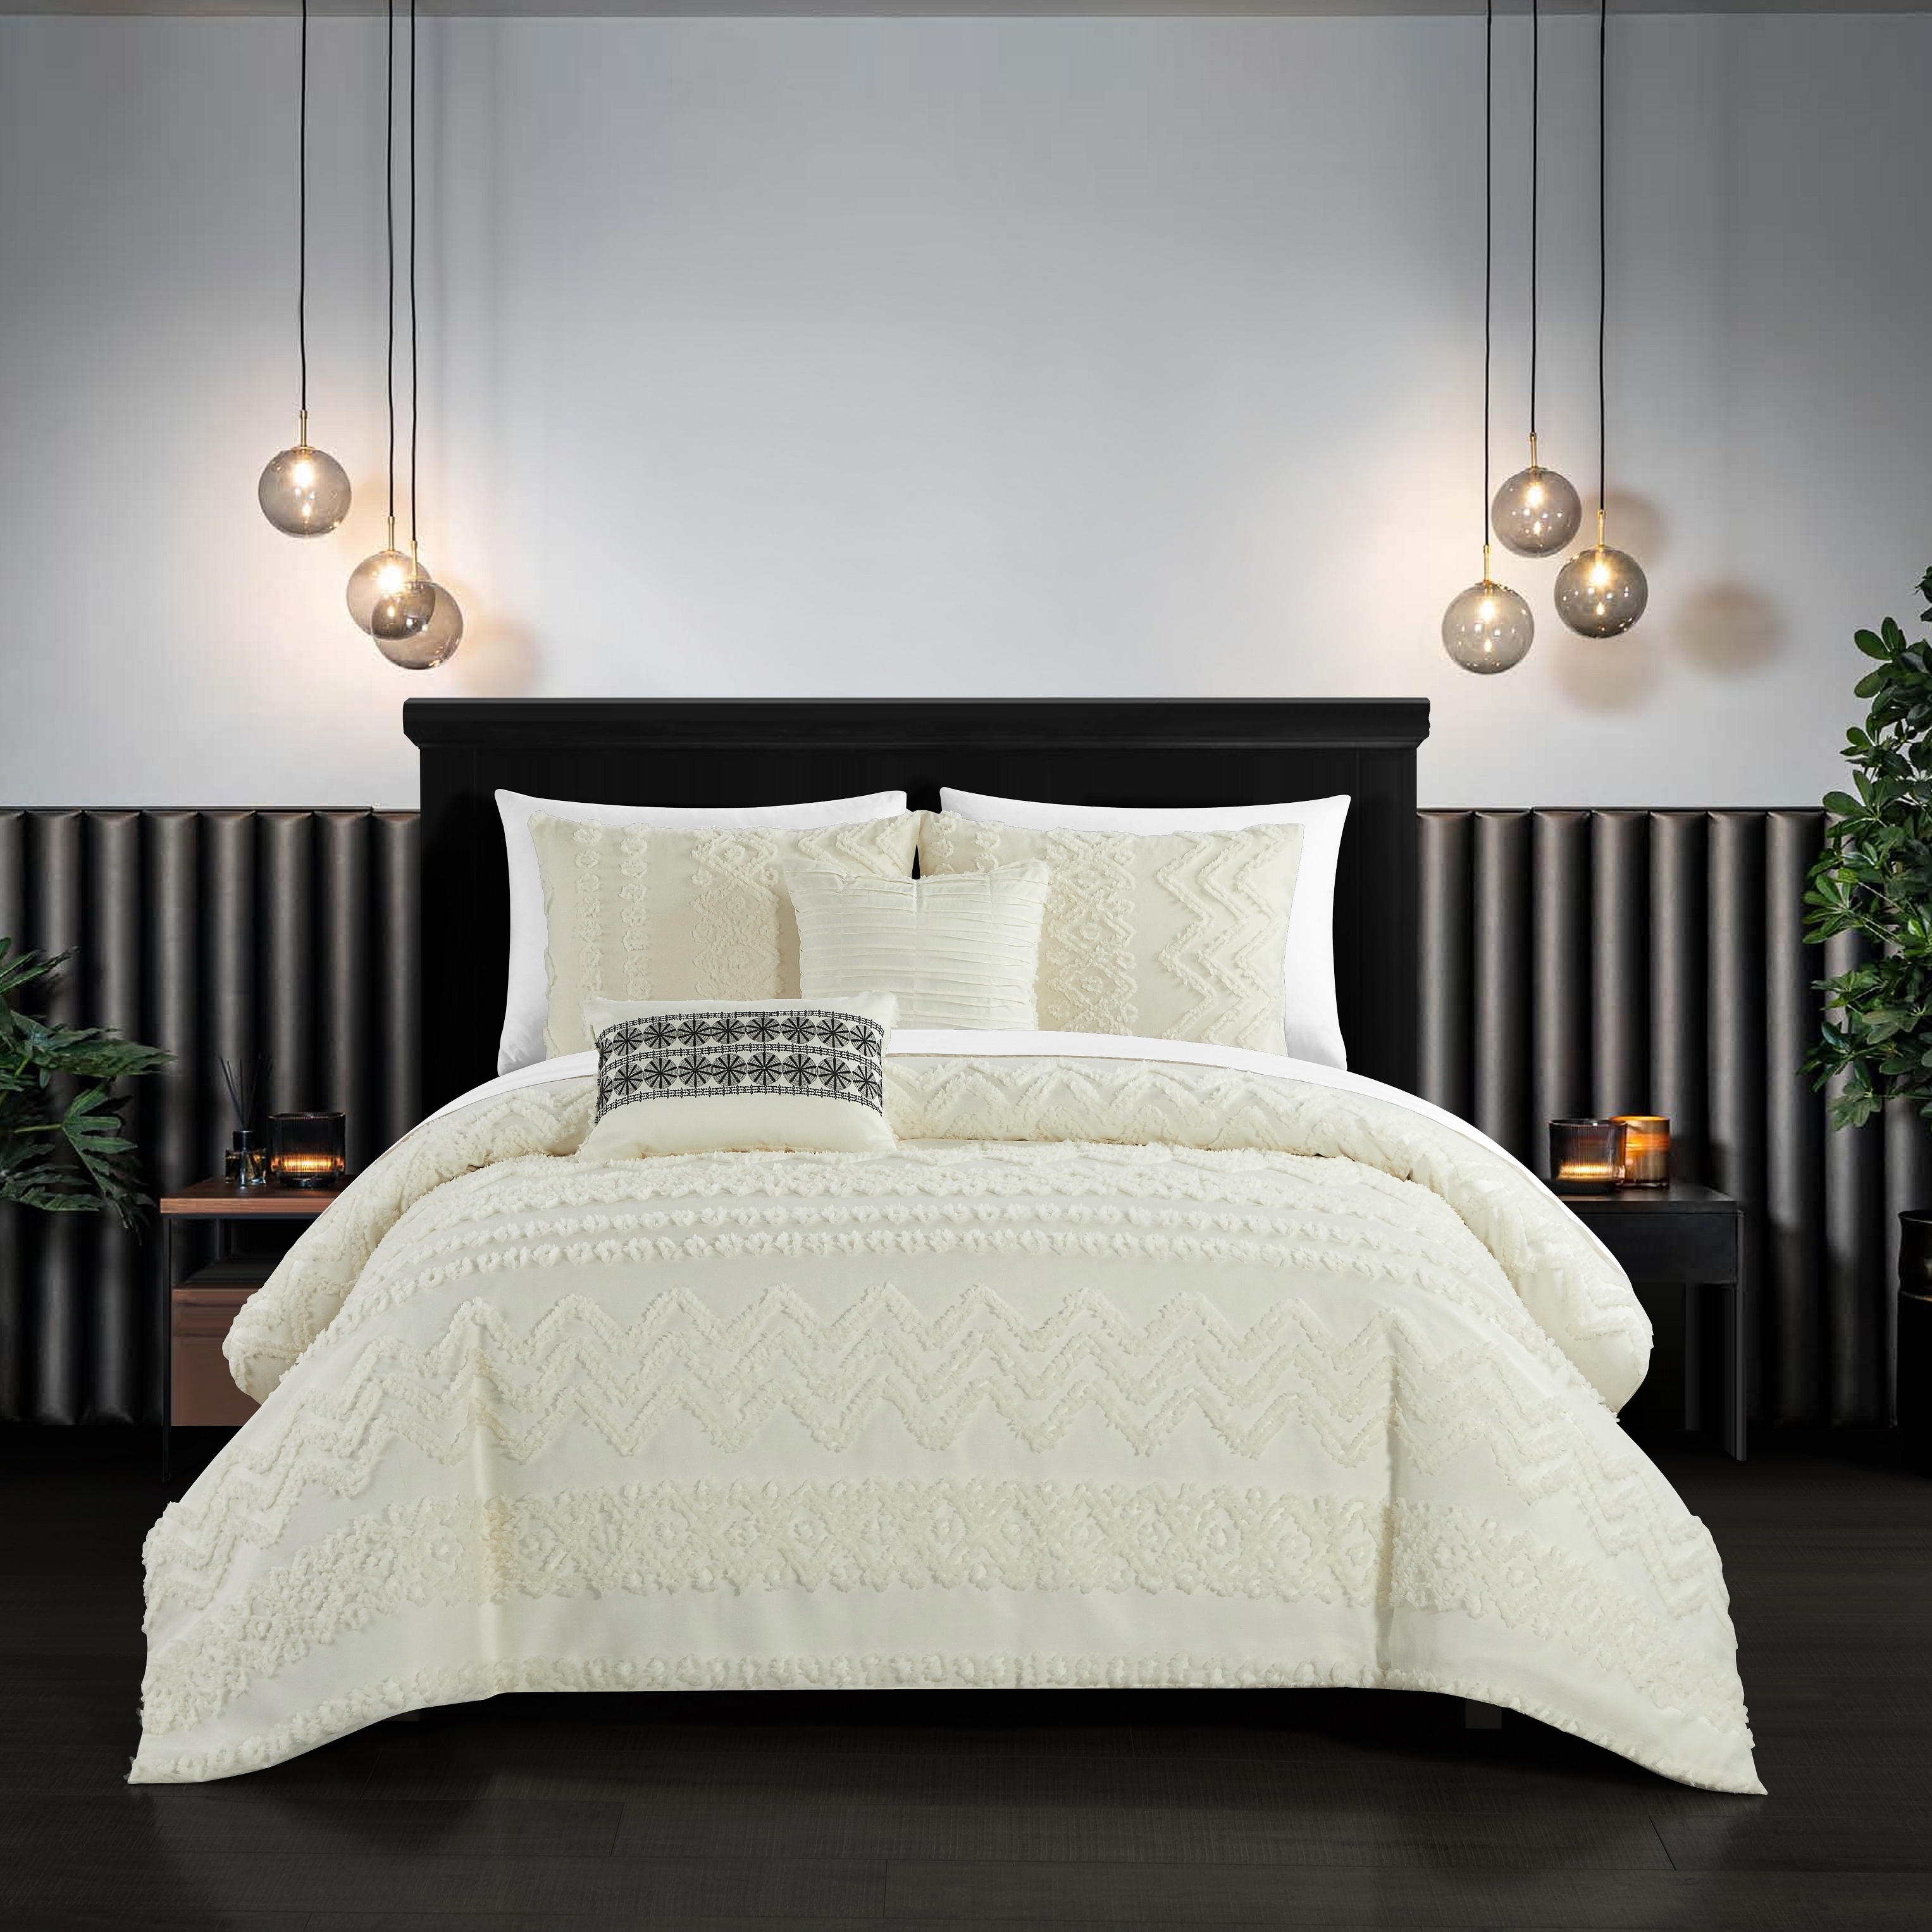 Jenson 5 Piece Comforter Set Jacquard Chevron Geometric Pattern Design Bedding - Beige, Queen